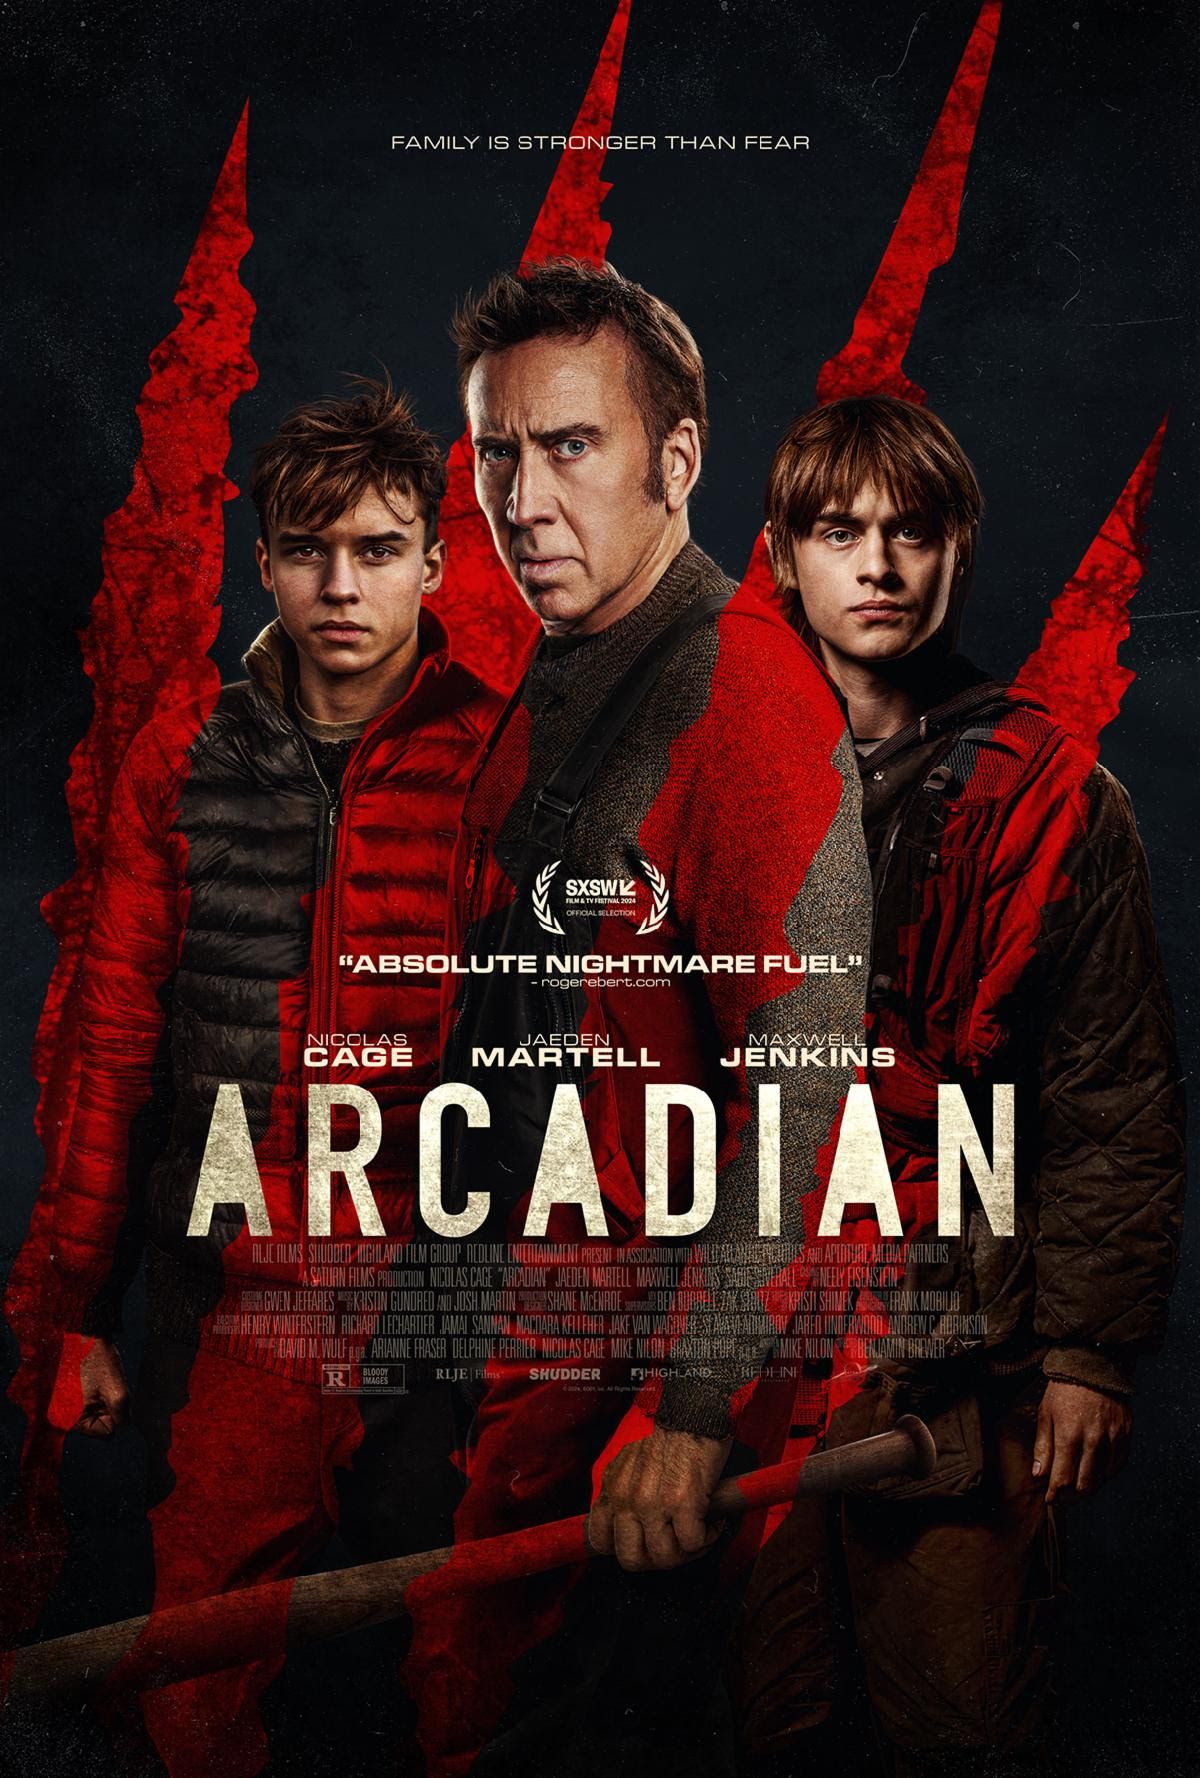 Pôster do filme Arcadian mostrando Nicolas Cage, Jaeden Martell e Maxwell Jenkins